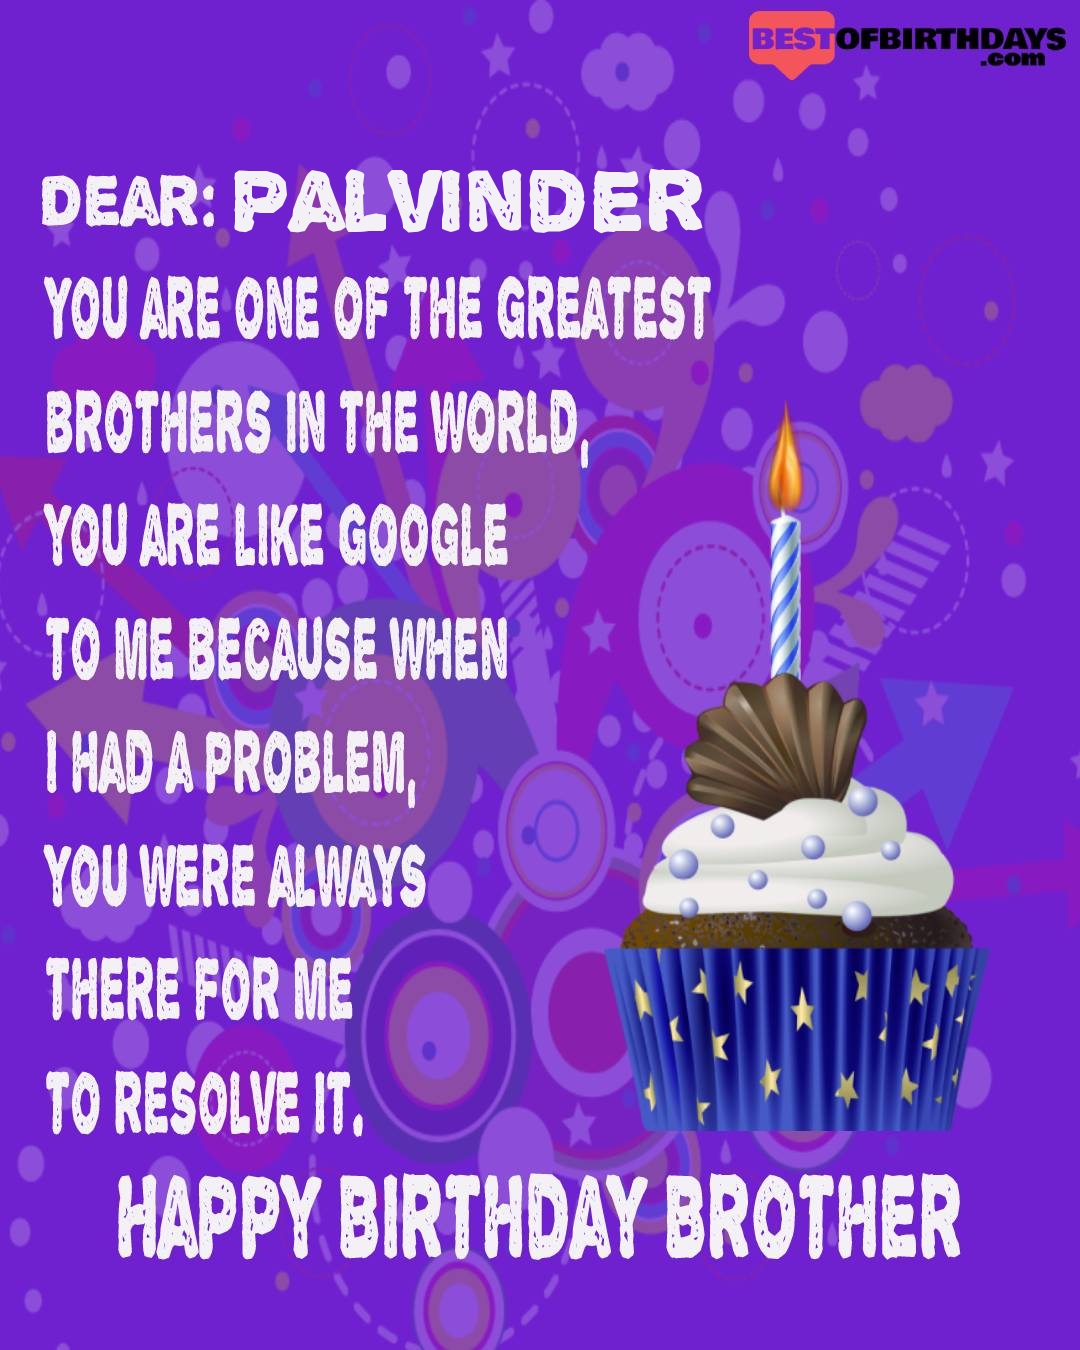 Happy birthday palvinder bhai brother bro